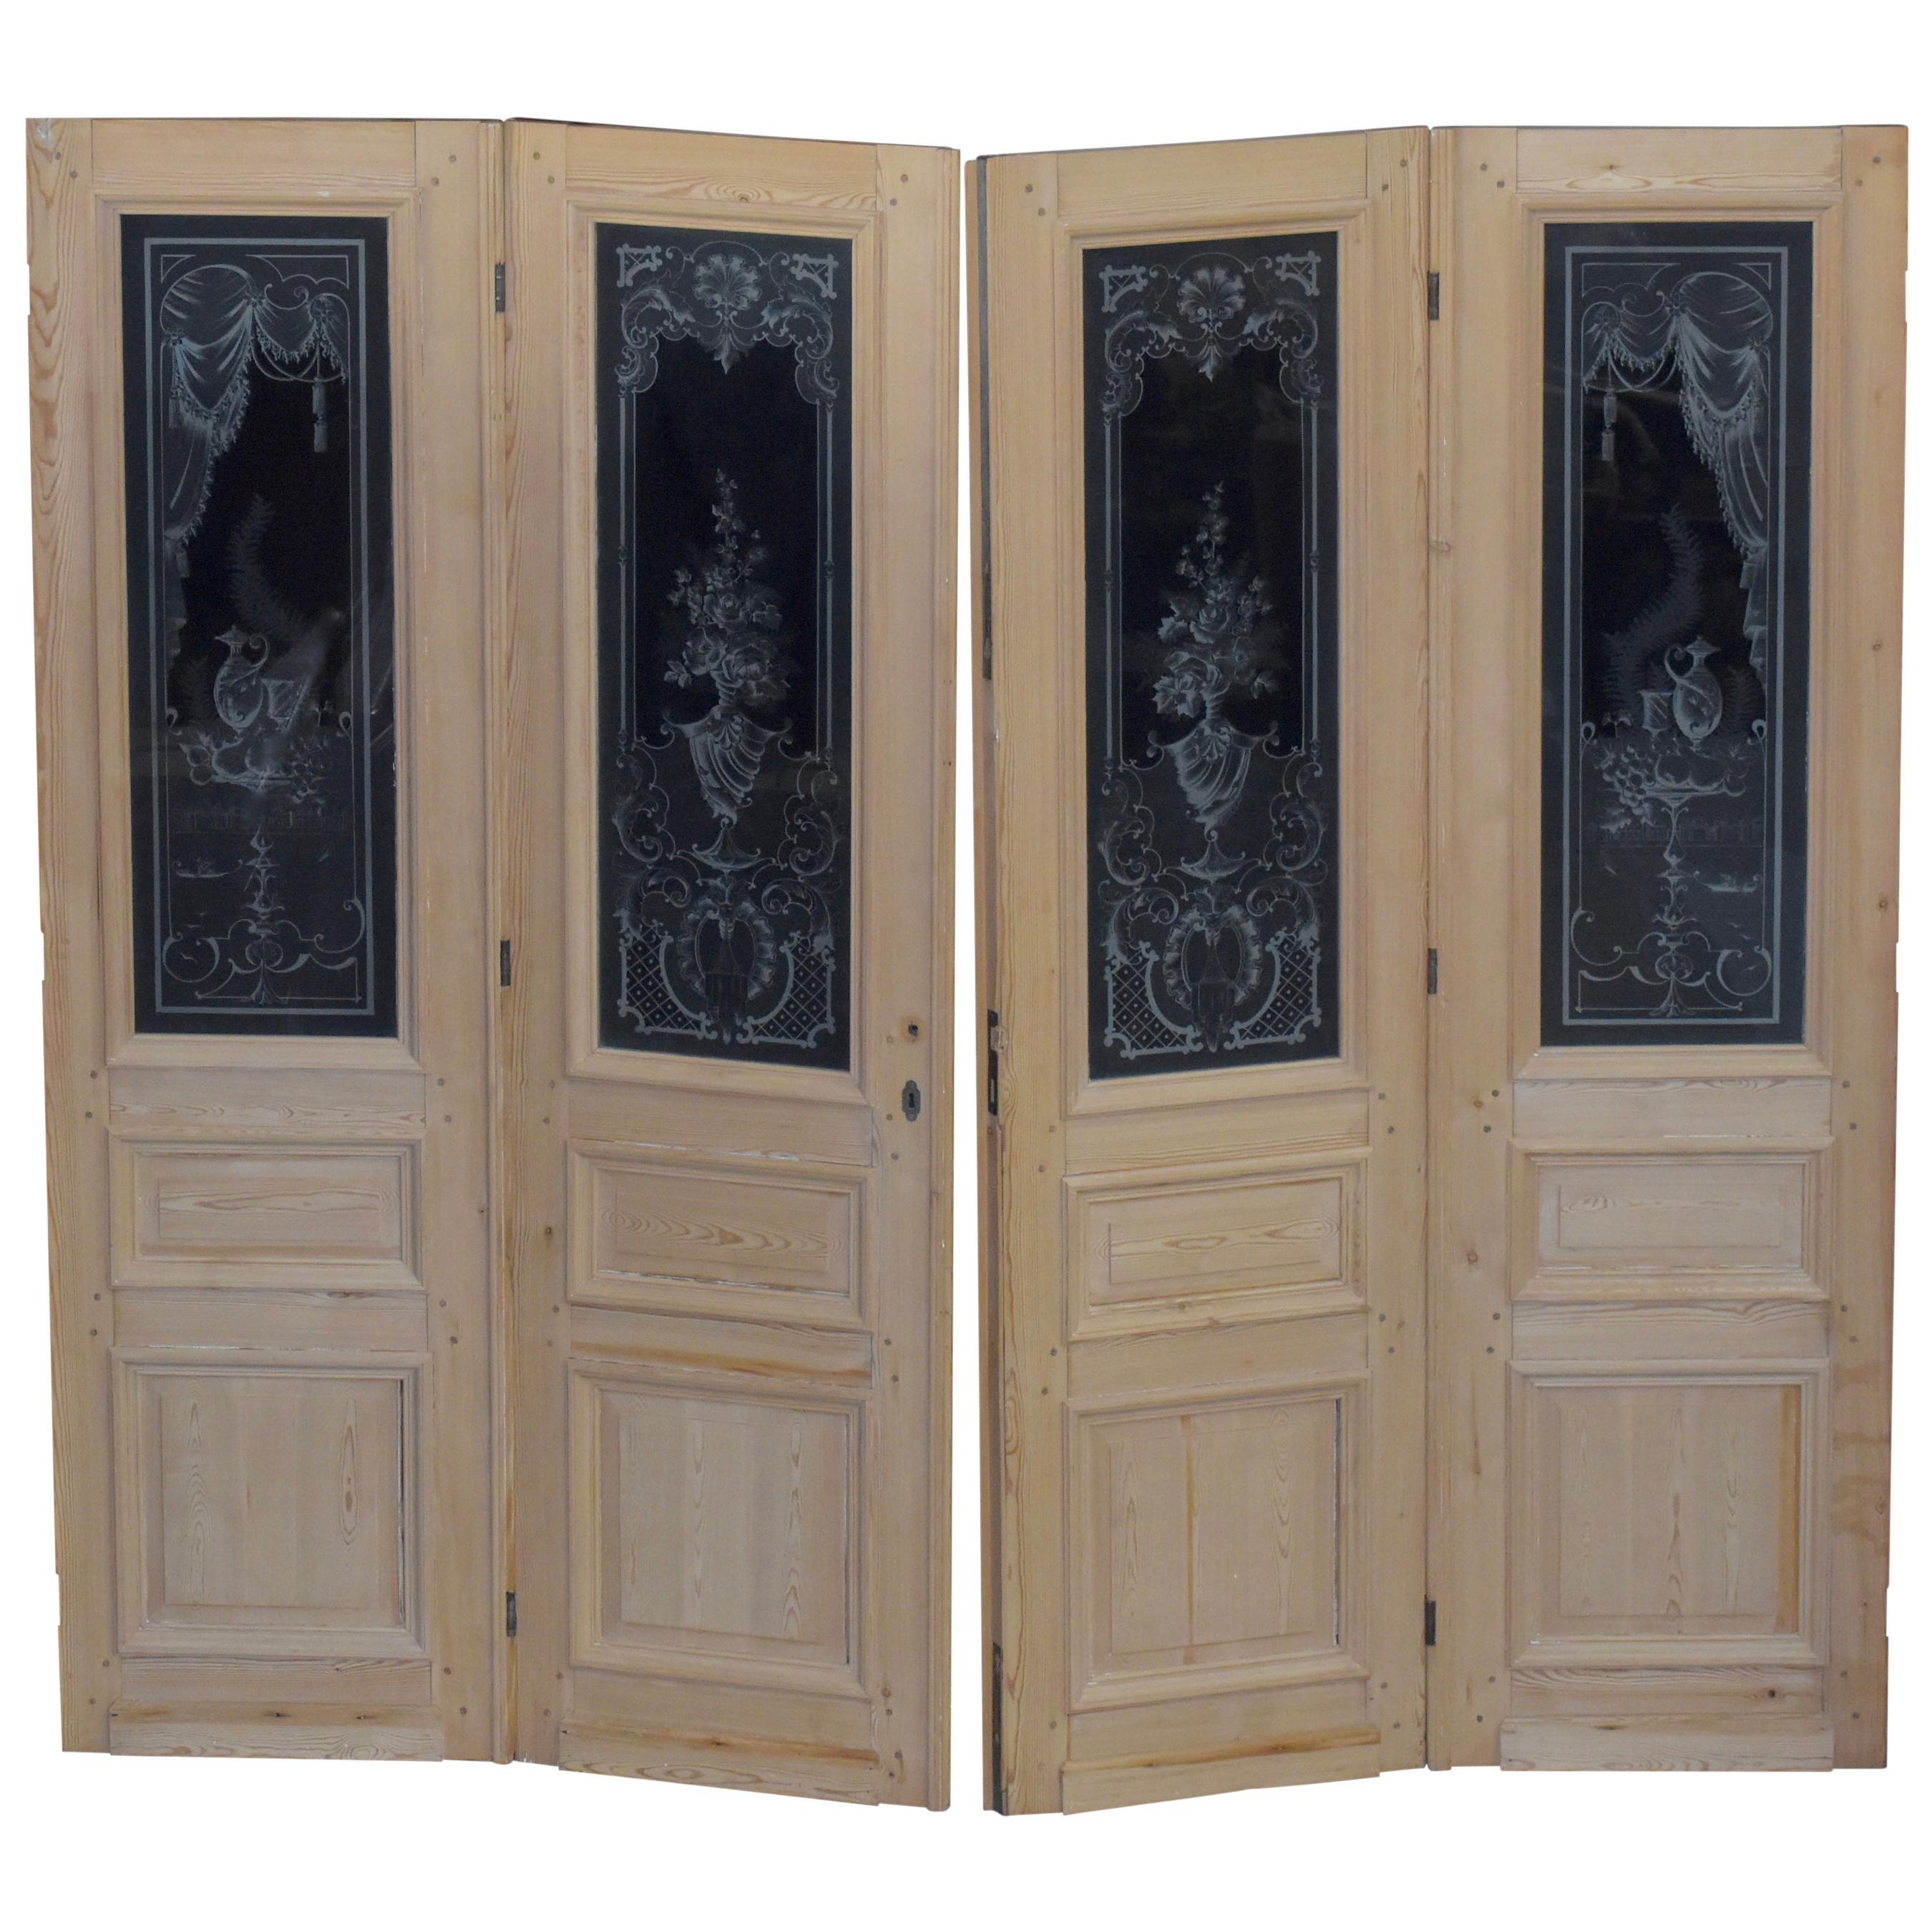 Set of Pine Etched Glass Doors, circa 1900